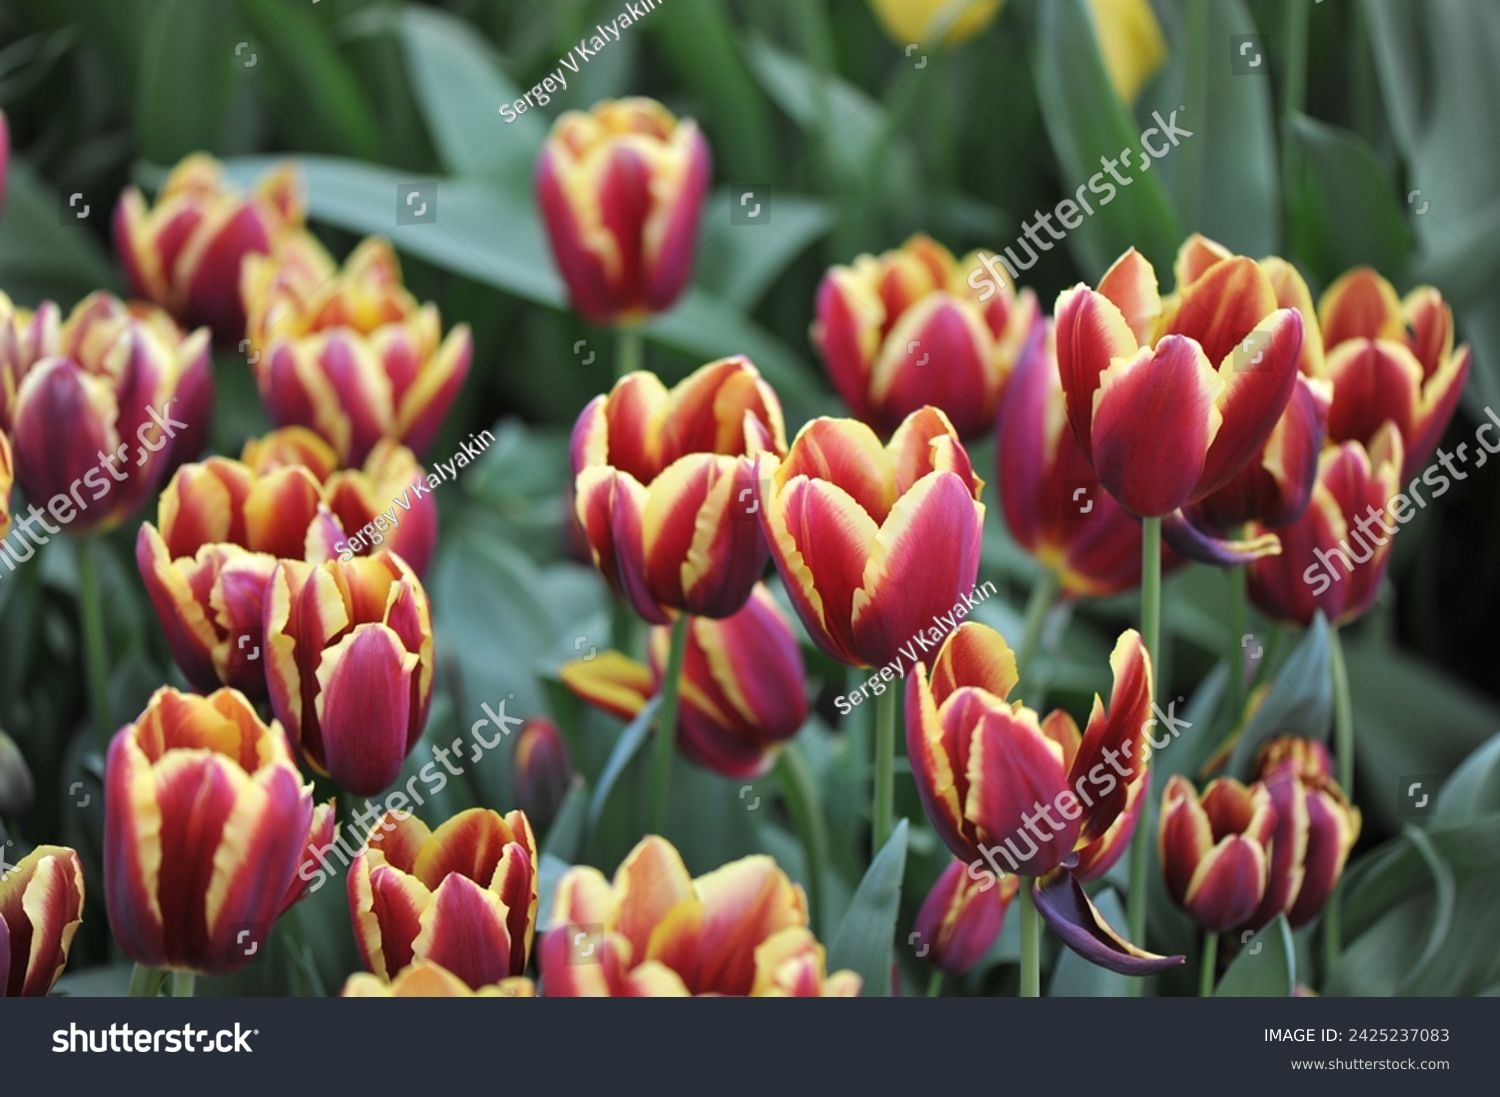 Dark red with yellow edges Triumph tulips (Tulipa) Doberman bloom in a garden in April #2425237083